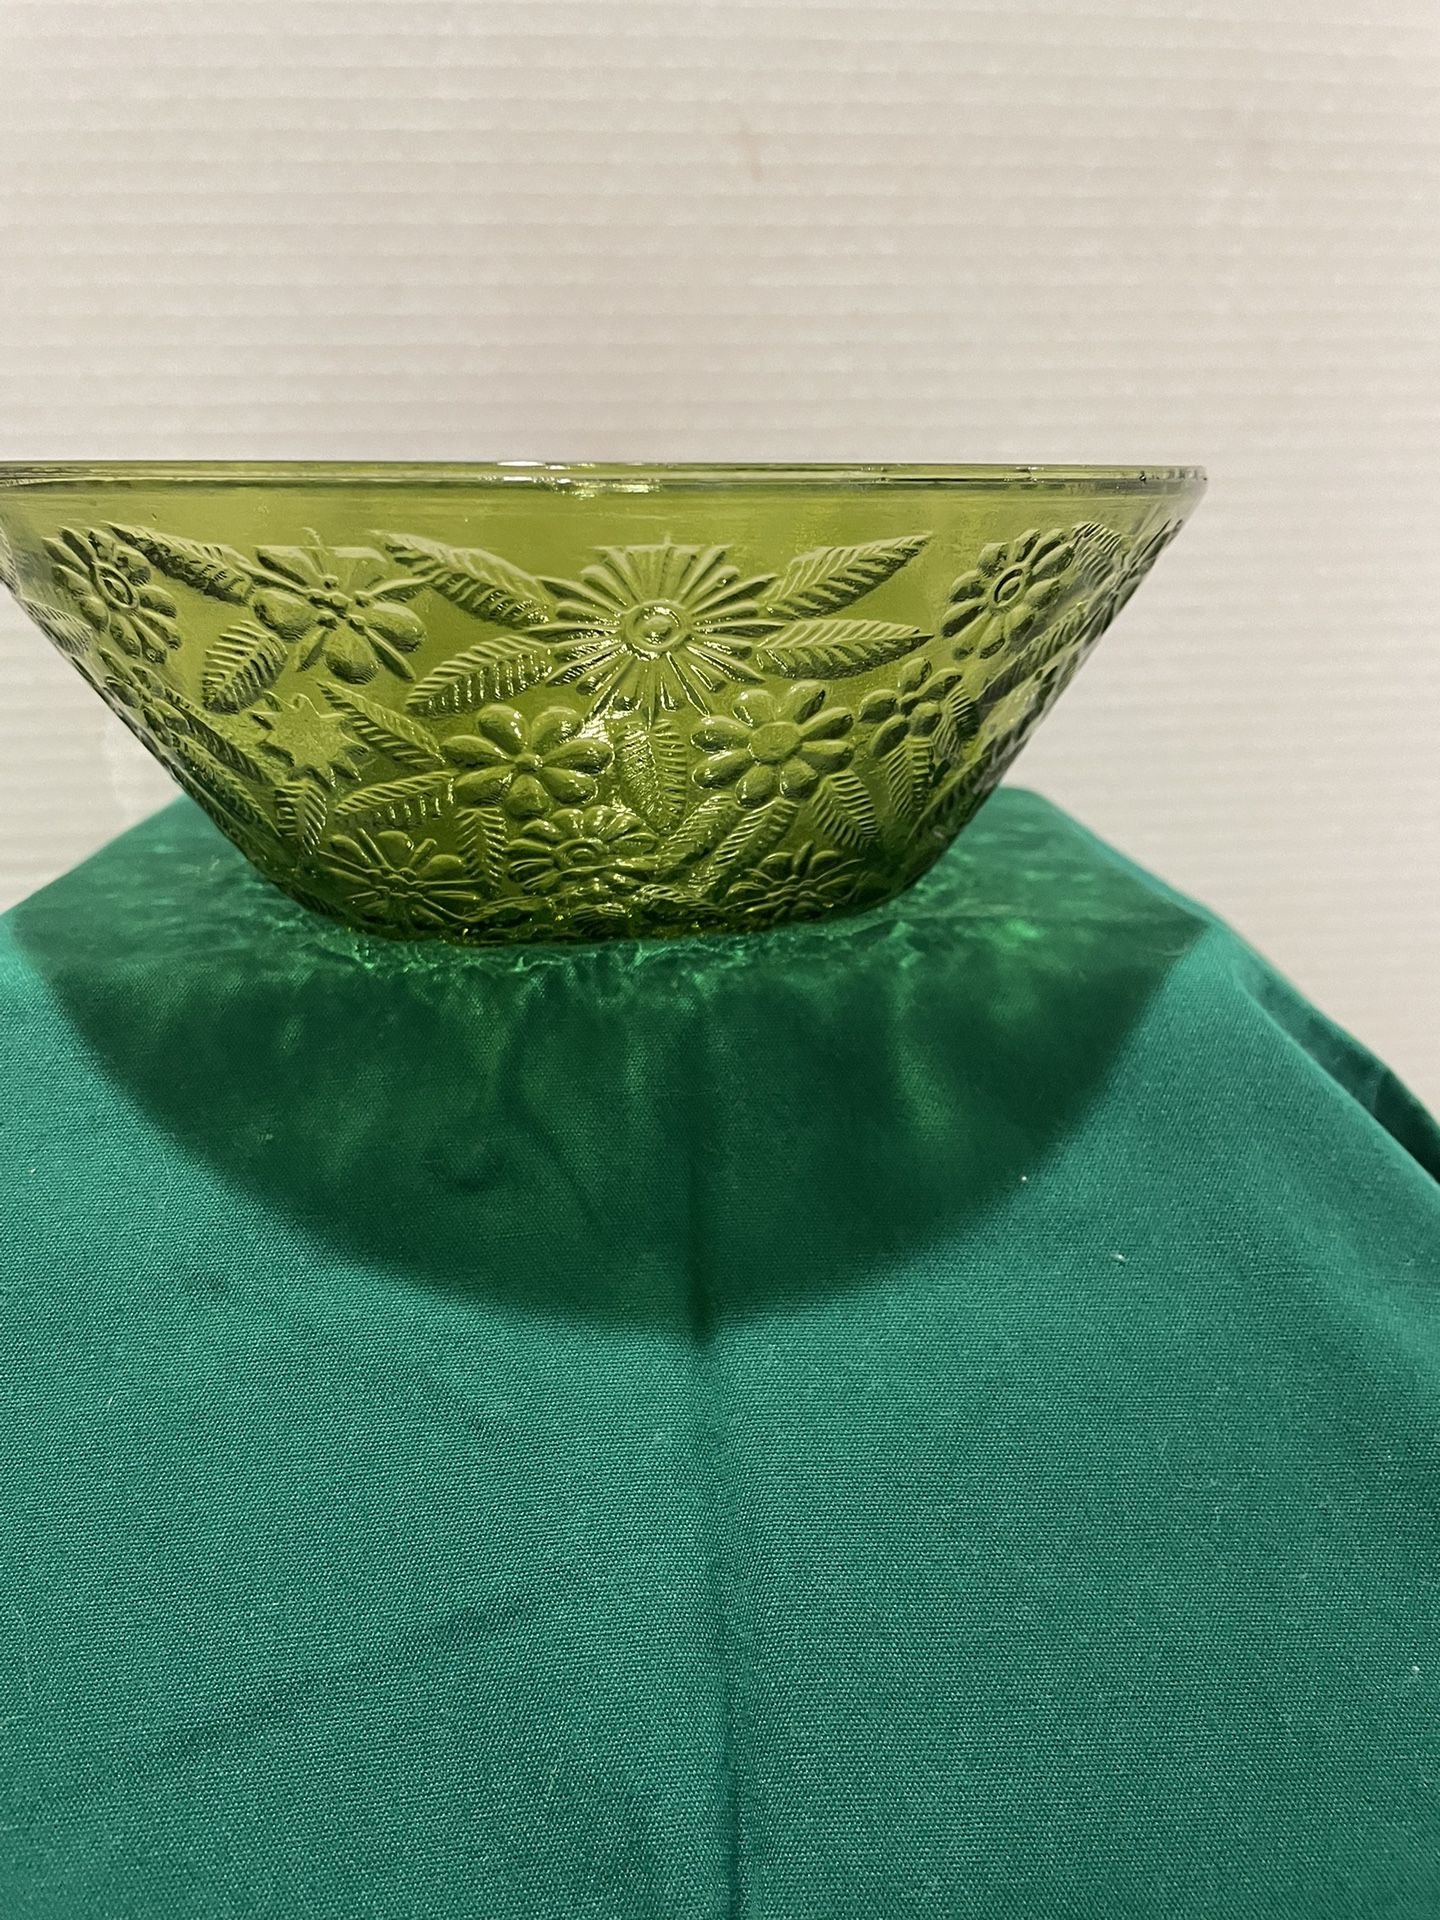 Indiana Green Depression Glass Bowl